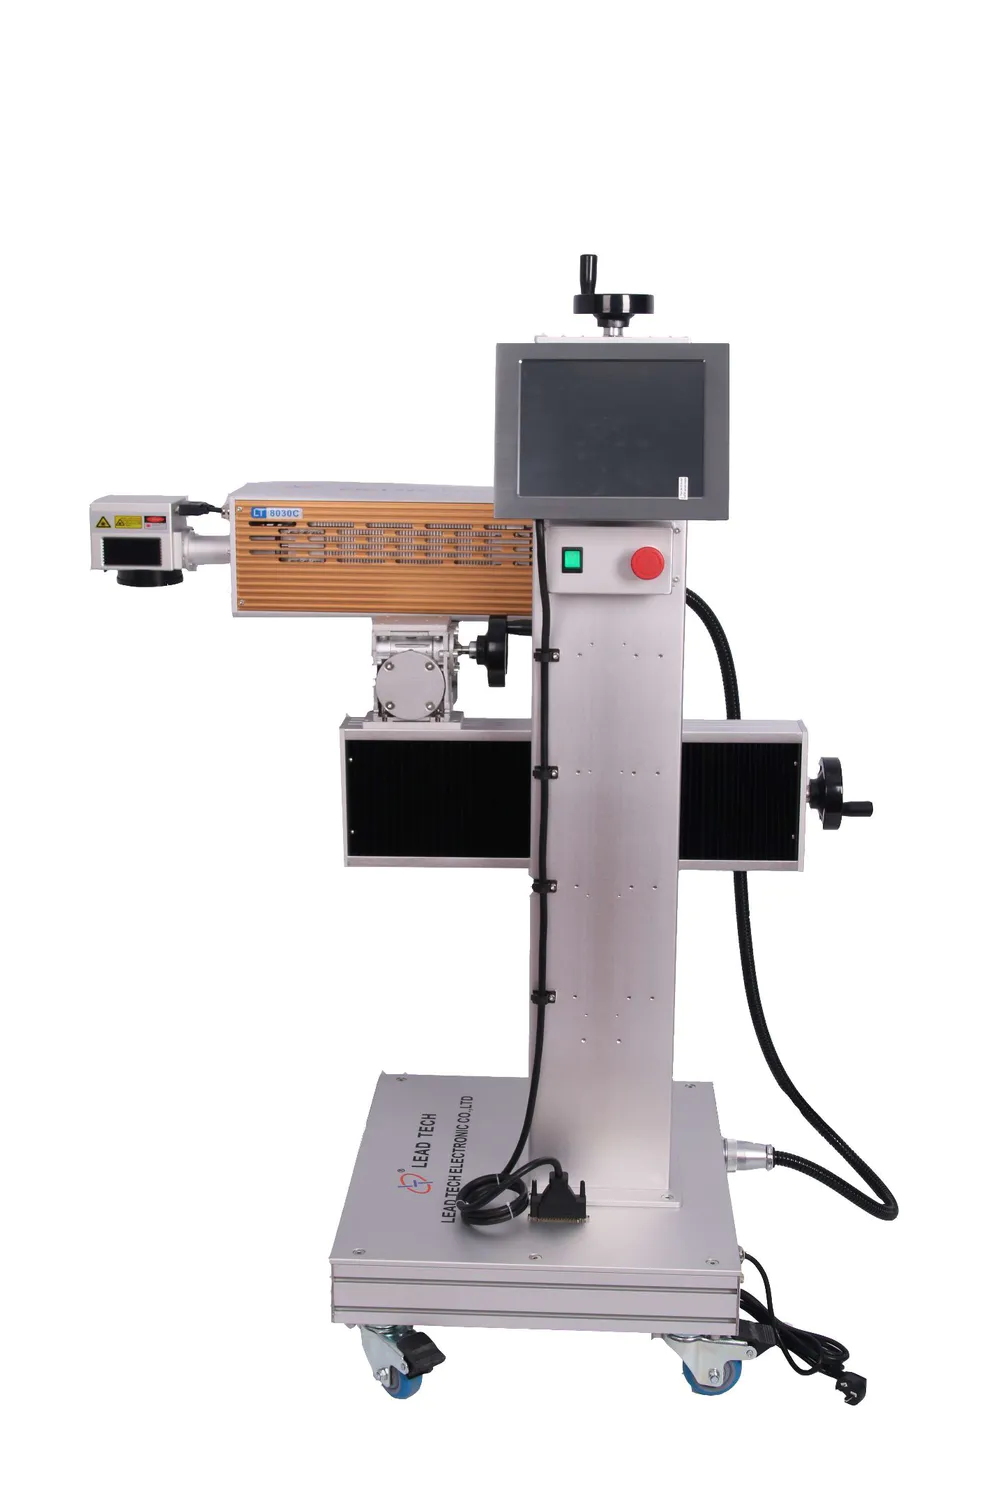 Lead Tech Lt8020c/Lt8030c CO2 20W/30W High Precision Digital Laser Engraving Marking Printer for Cans/Bottles